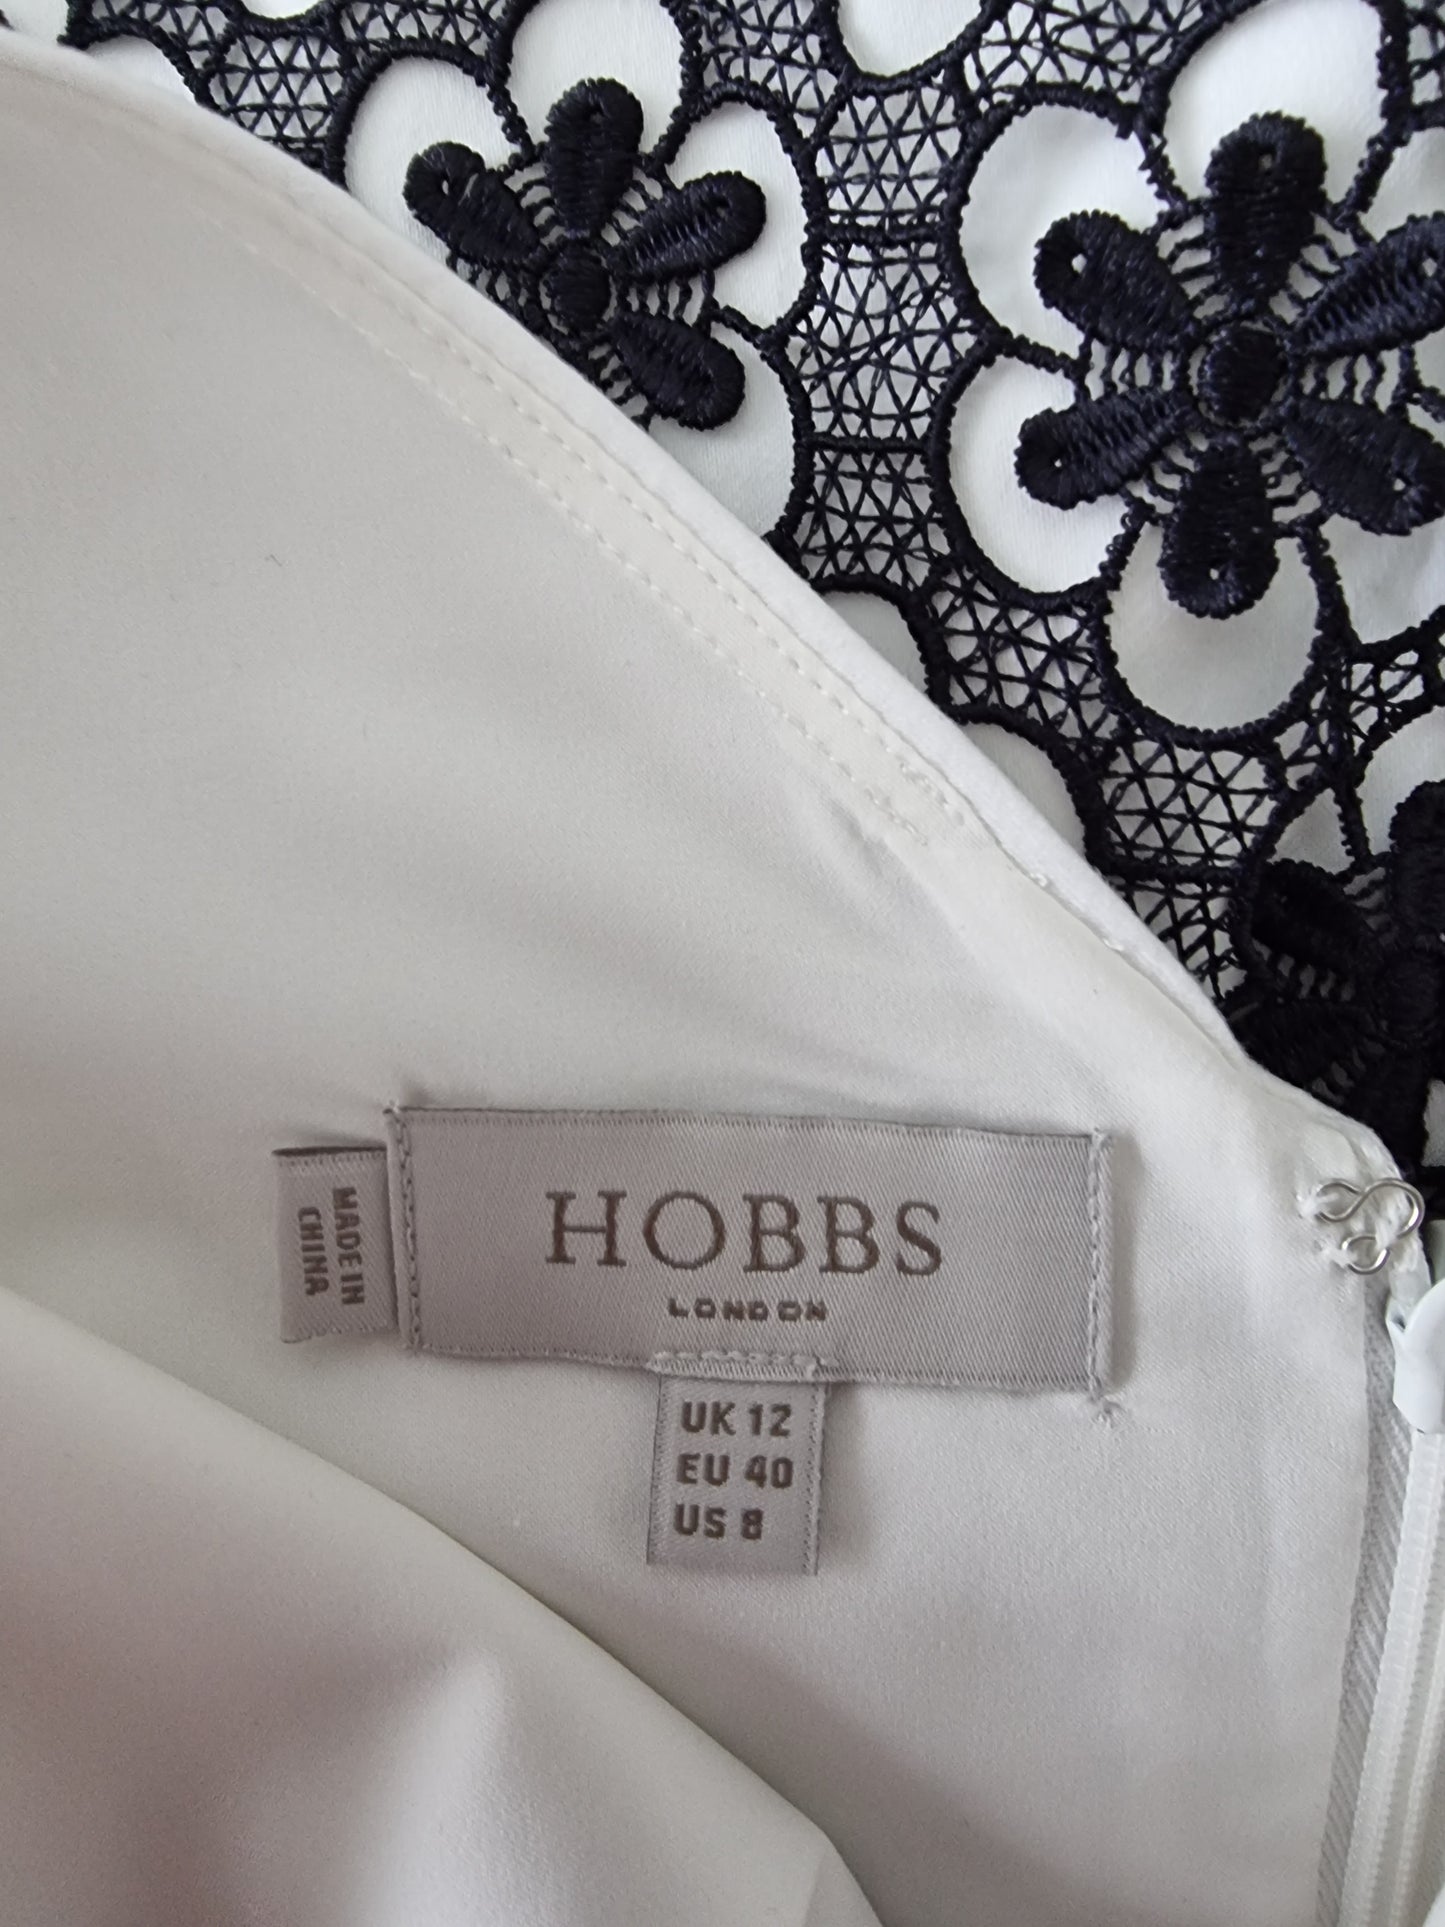 Hobbs Navy & White Lace Dress UK 12 US 8 EU 40 Timeless Fashions